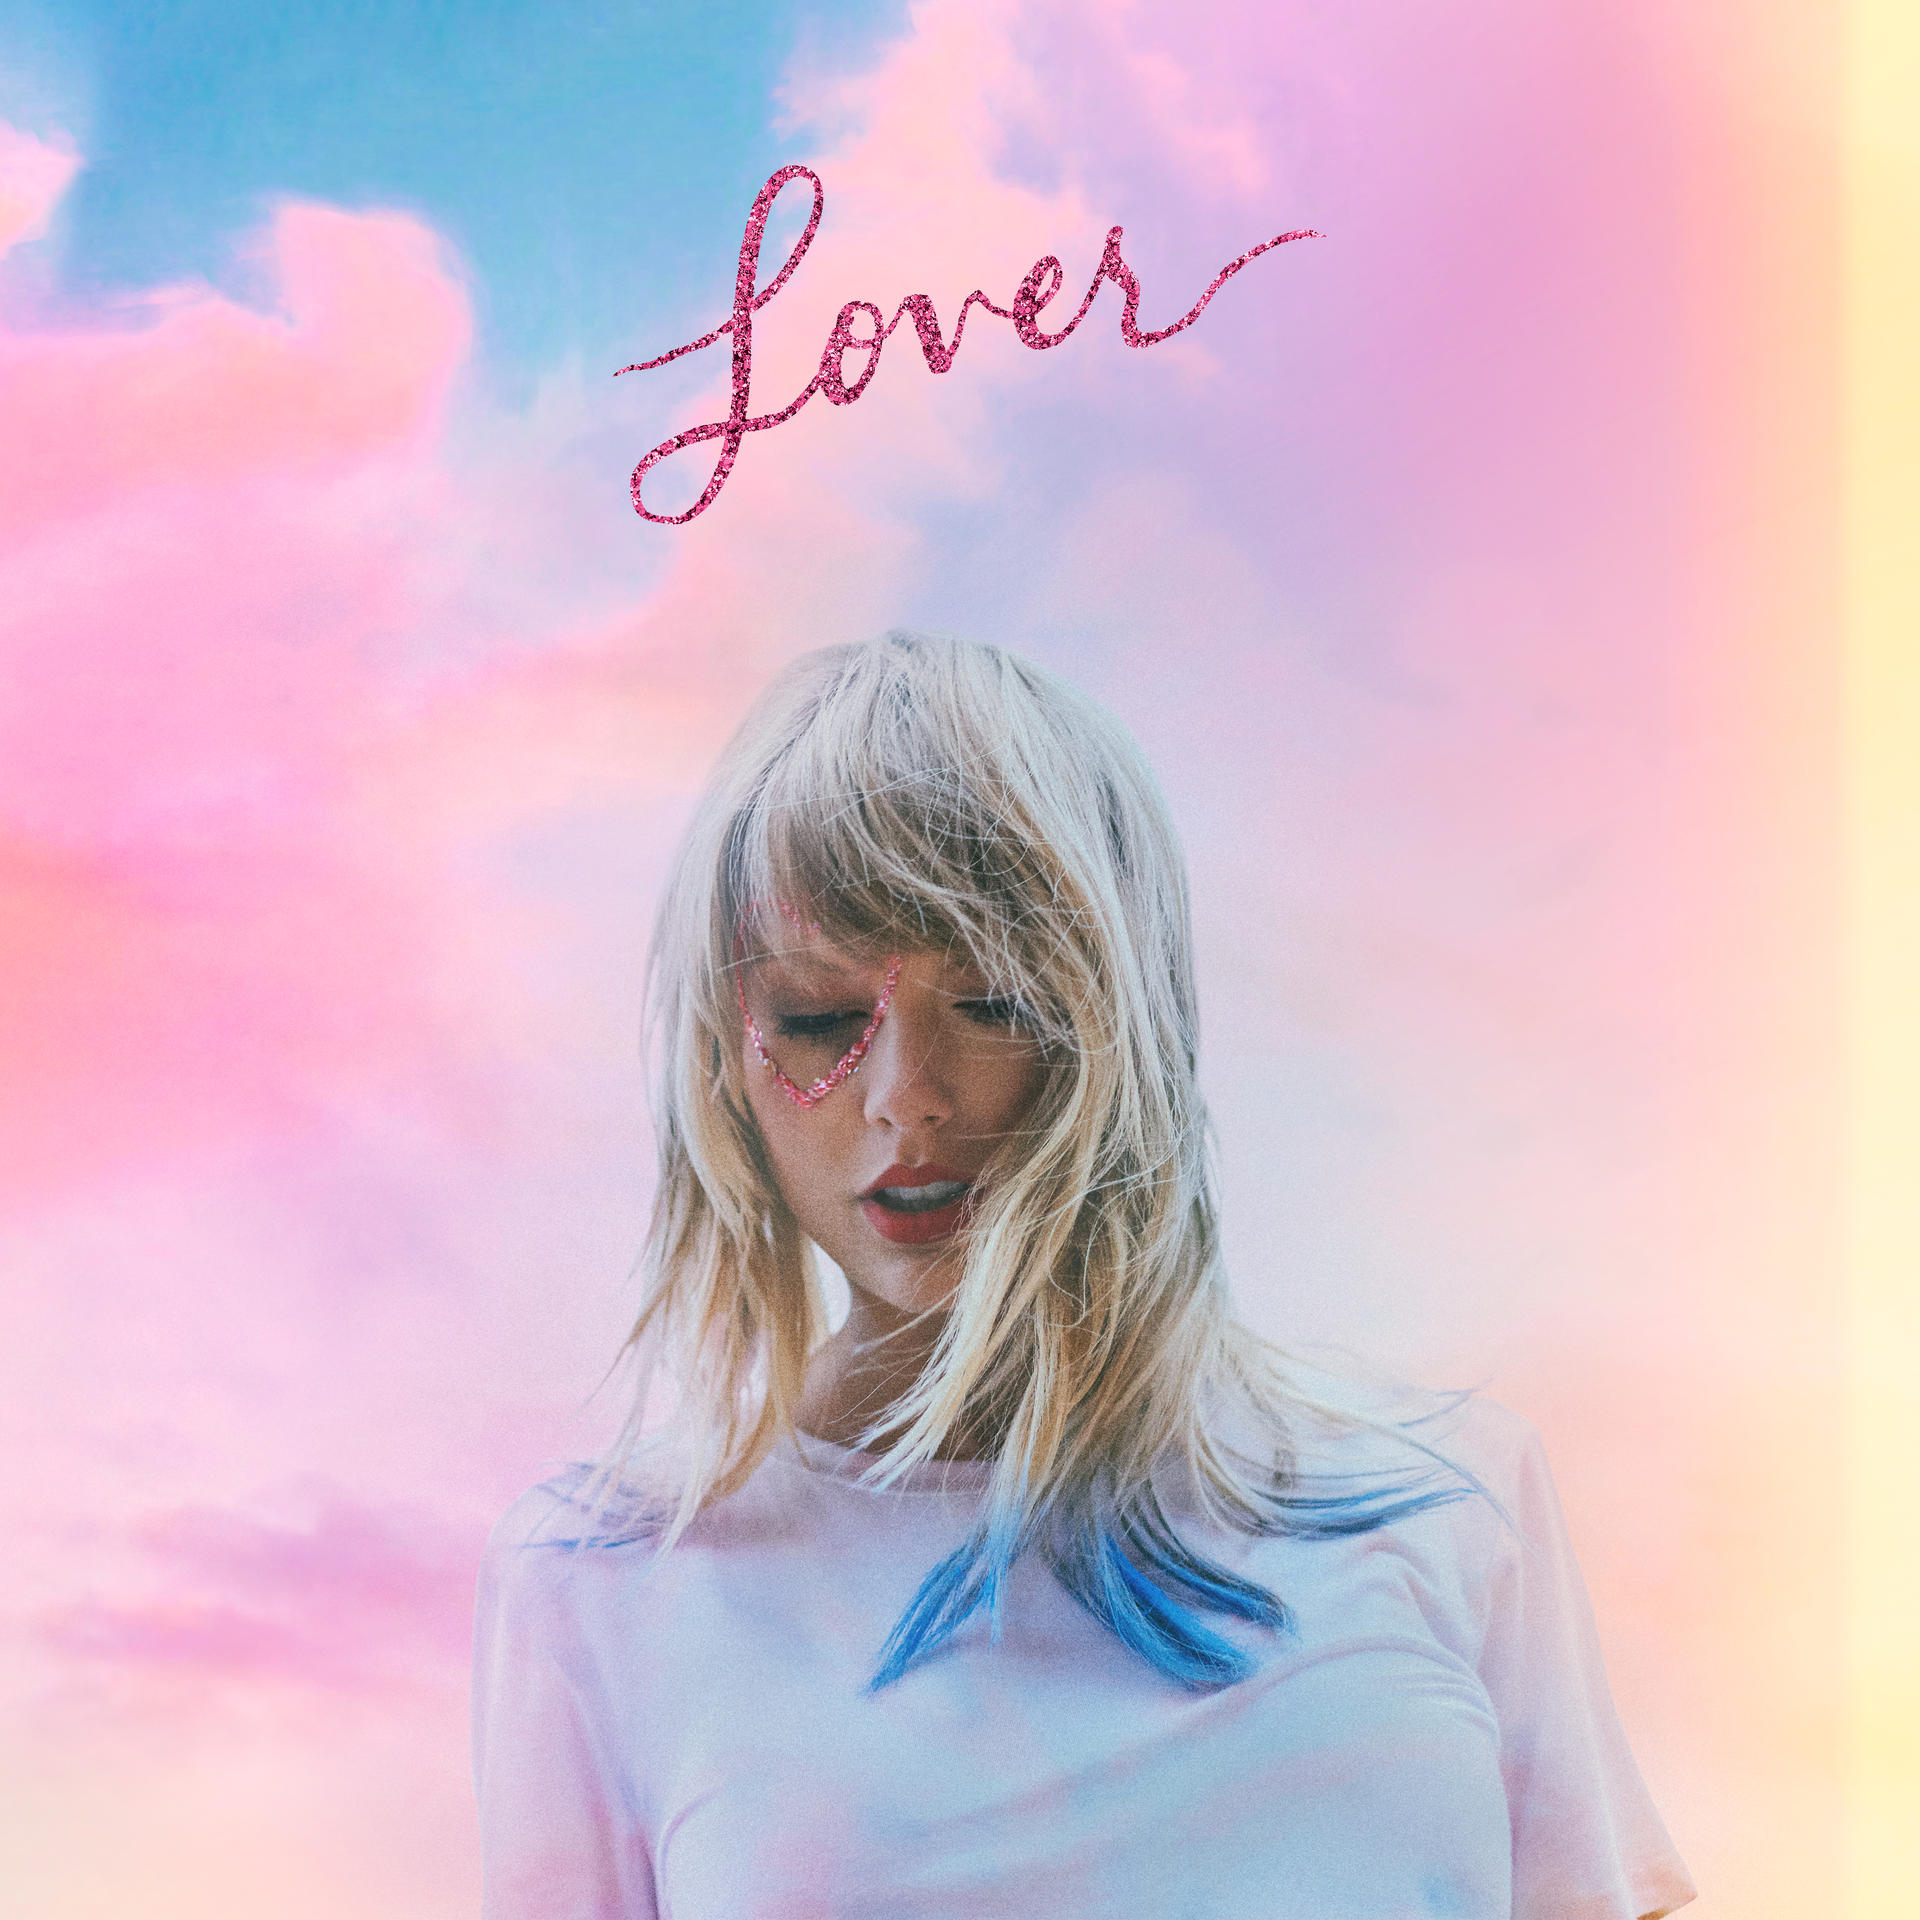 (Standard) Swift Lover (CD) - - Taylor